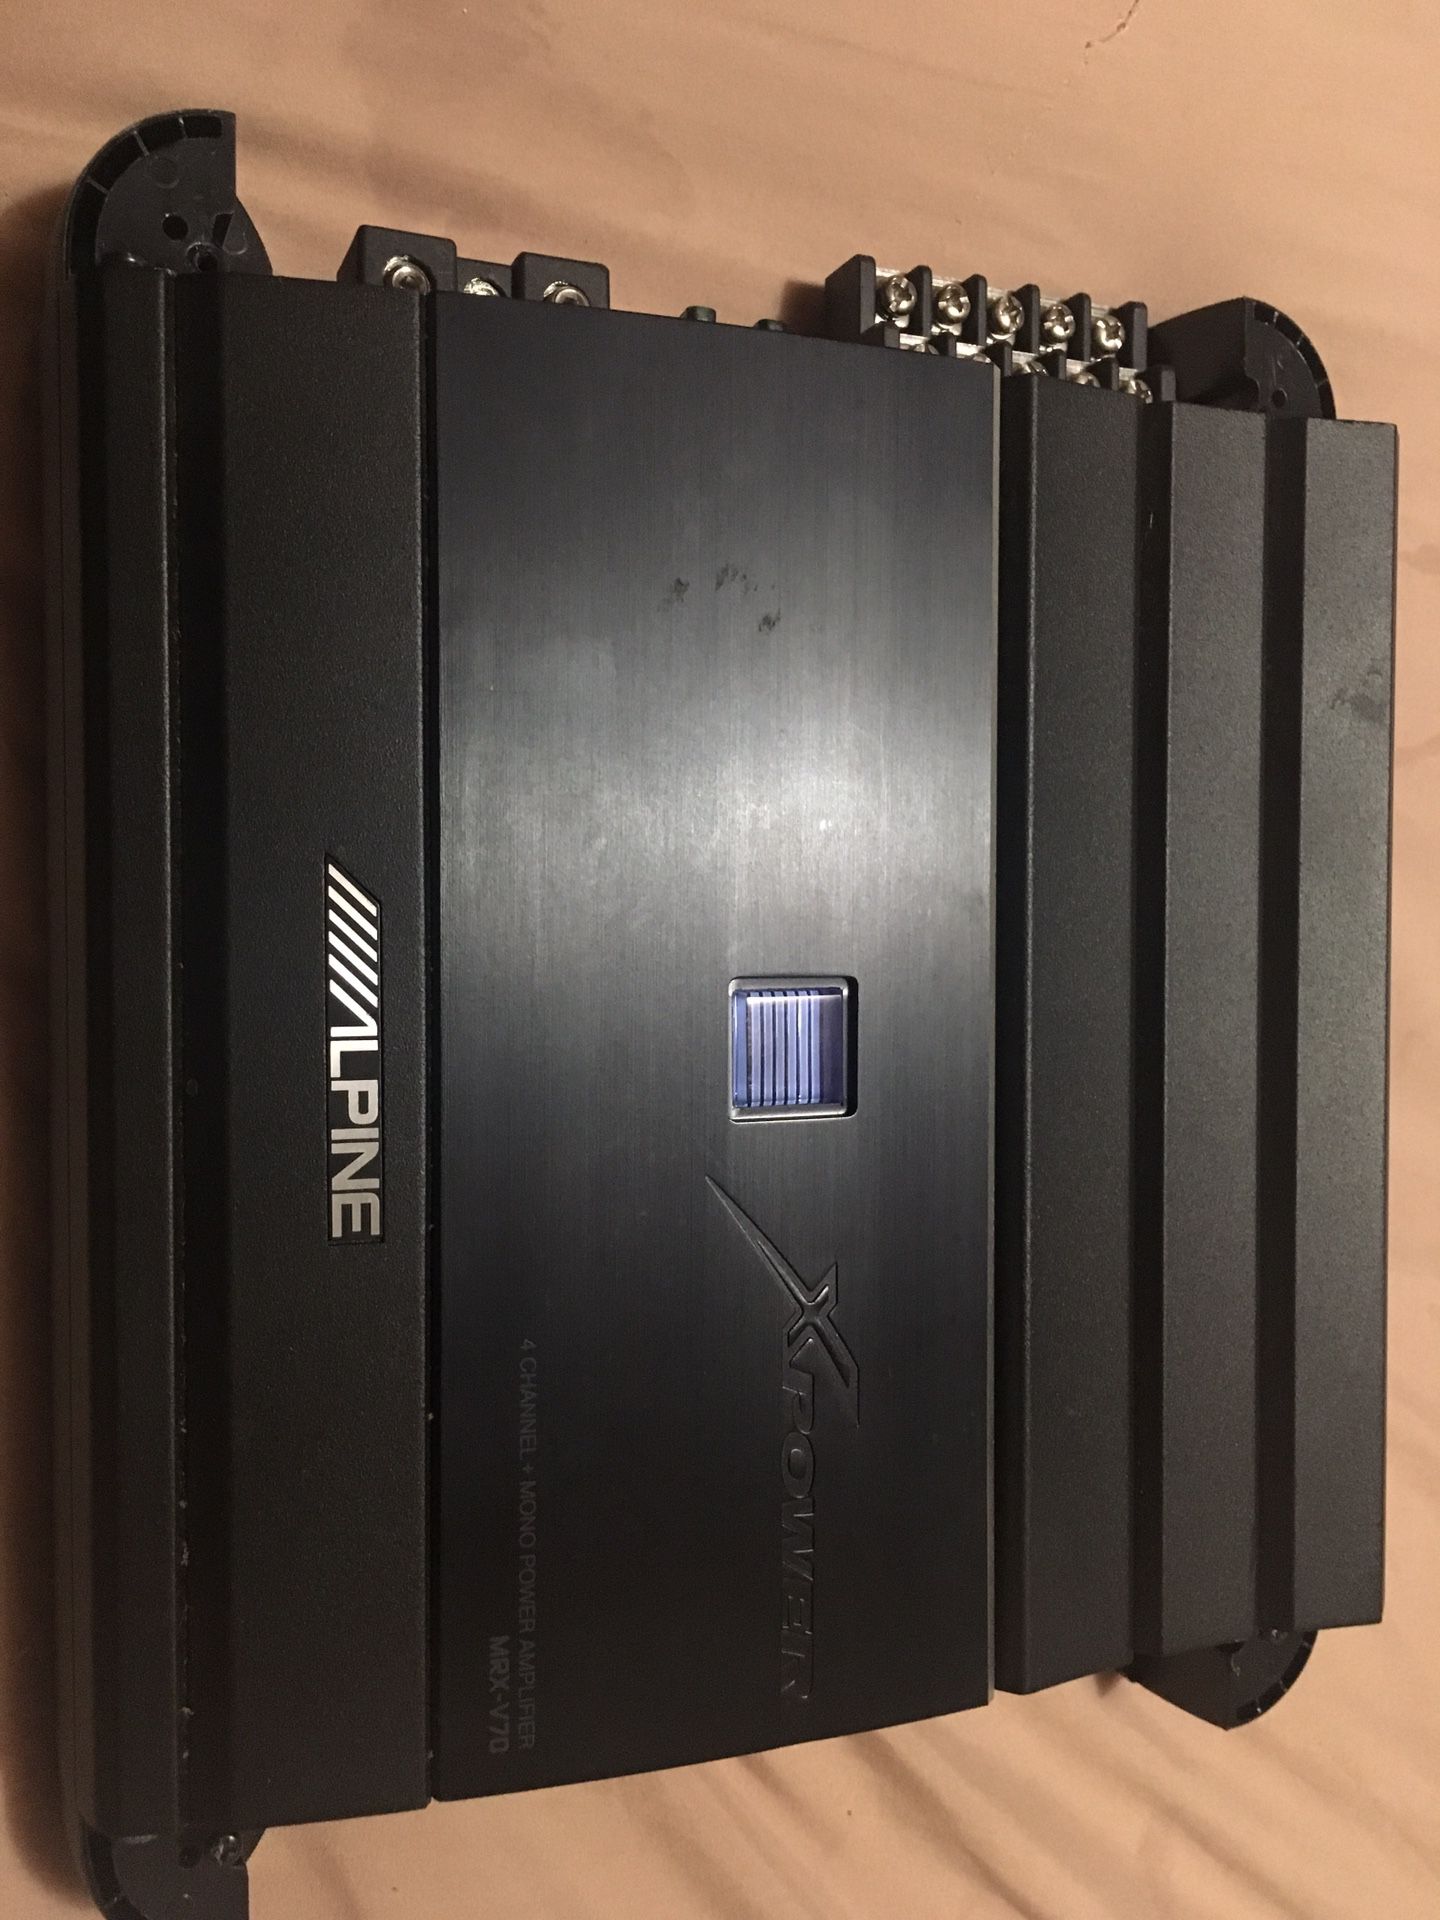 Alpine Mrx-v70 1000 watt amp 4-channel